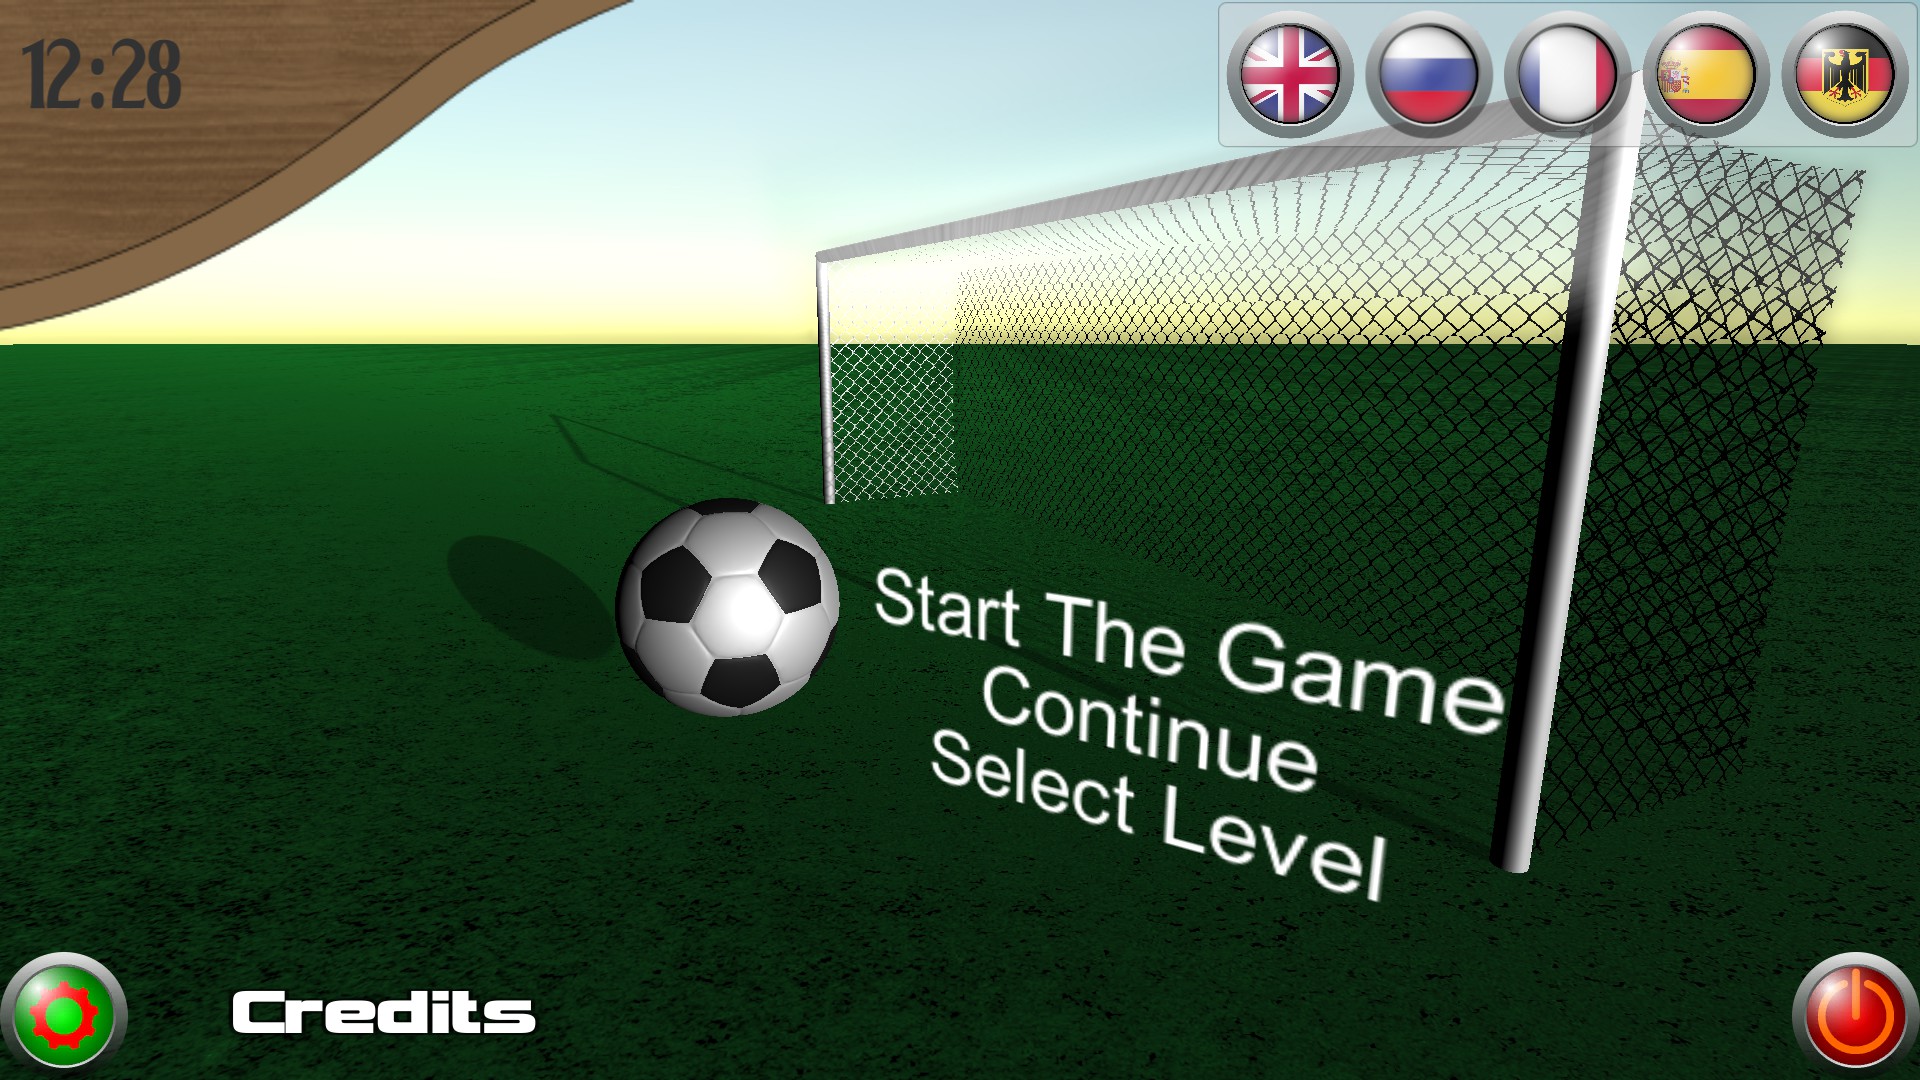 Score a goal (Physical football) - Win/Mac/Linux - (Steam)